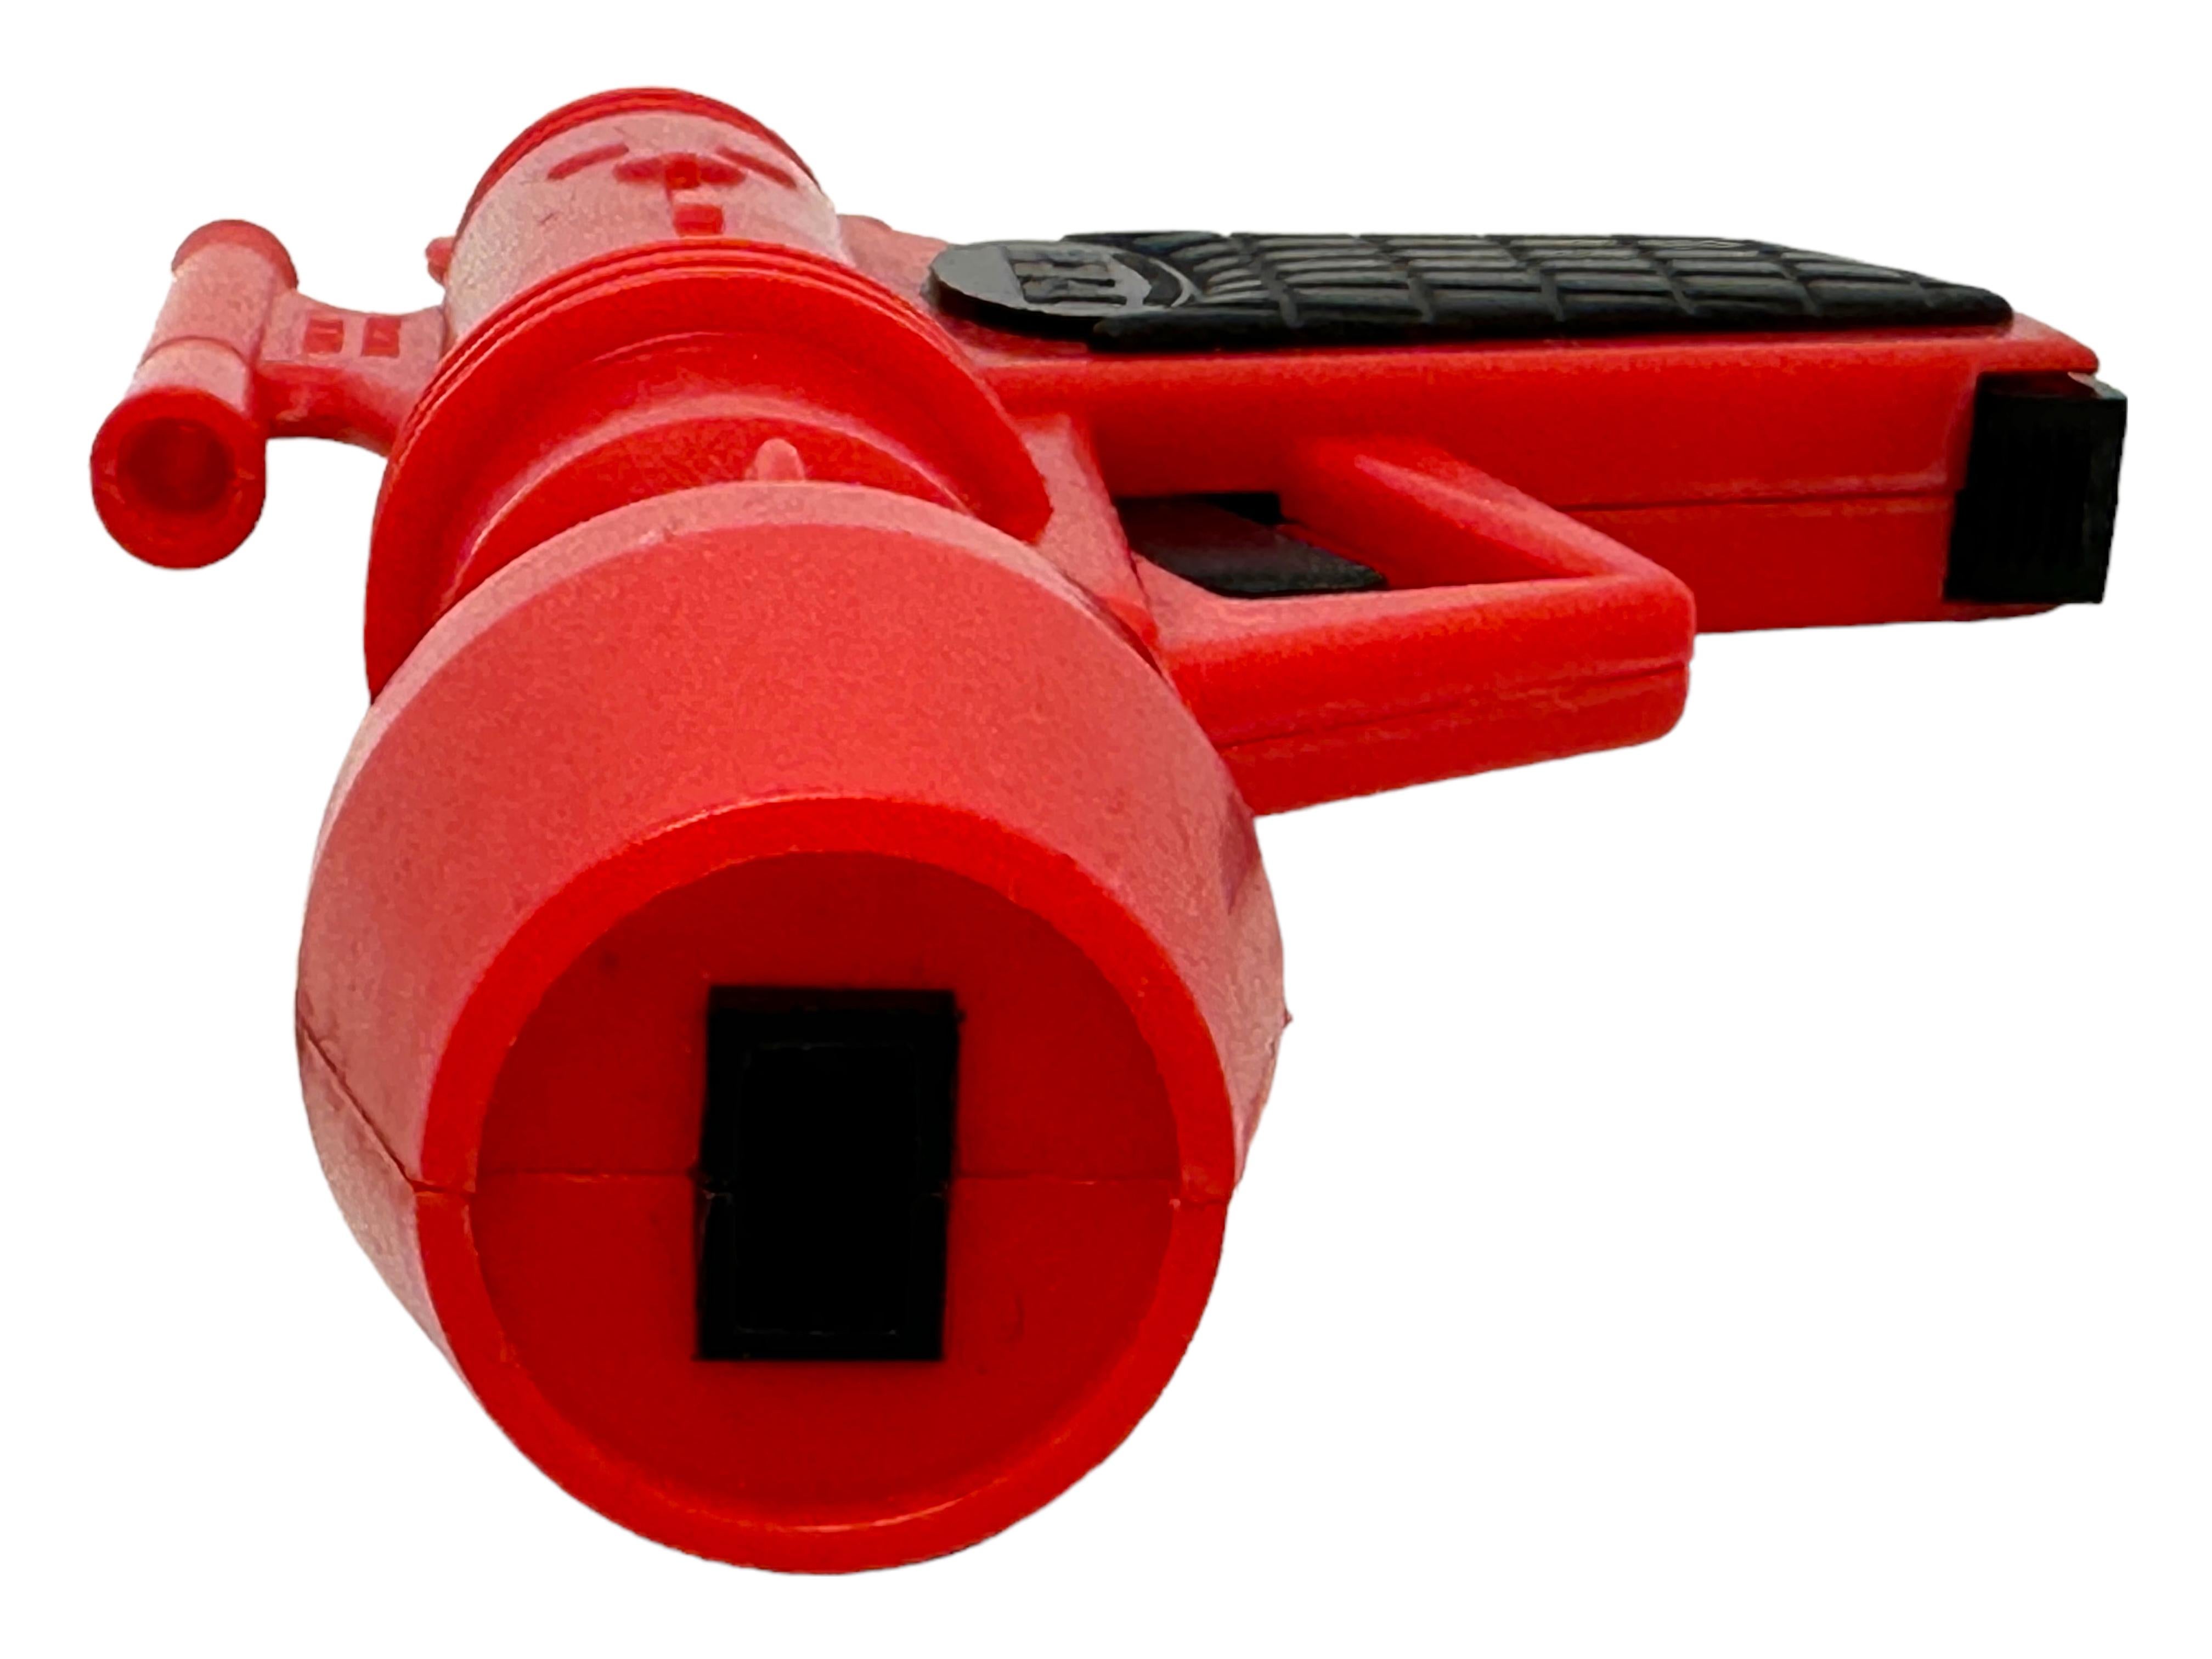 1980s Vintage Red PEZ Space Gun Candy Dispenser U. S. Pat. 3.370.746 In Good Condition For Sale In Nuernberg, DE